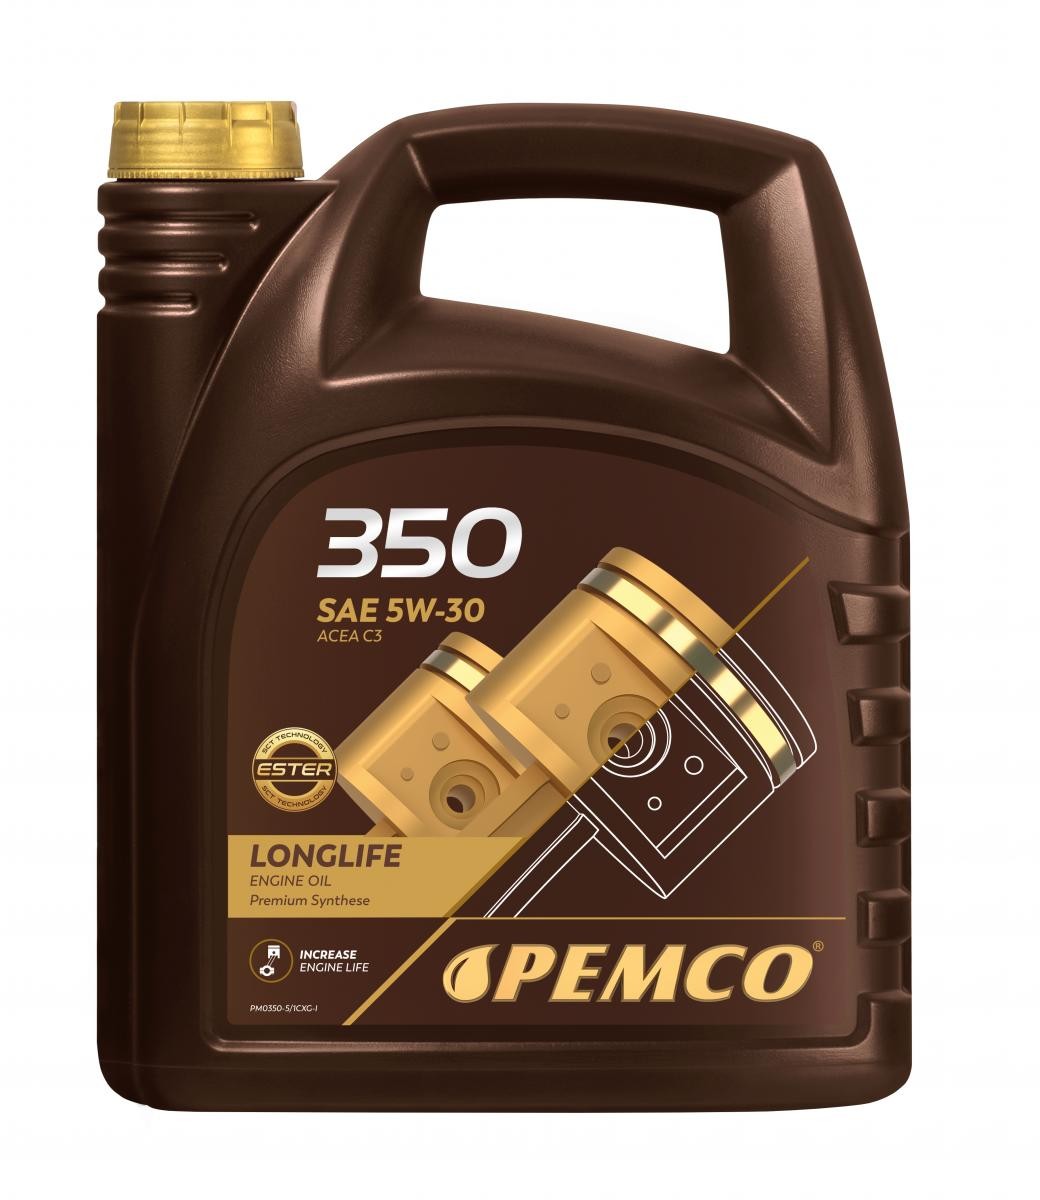 Car oil PM0350-5 review